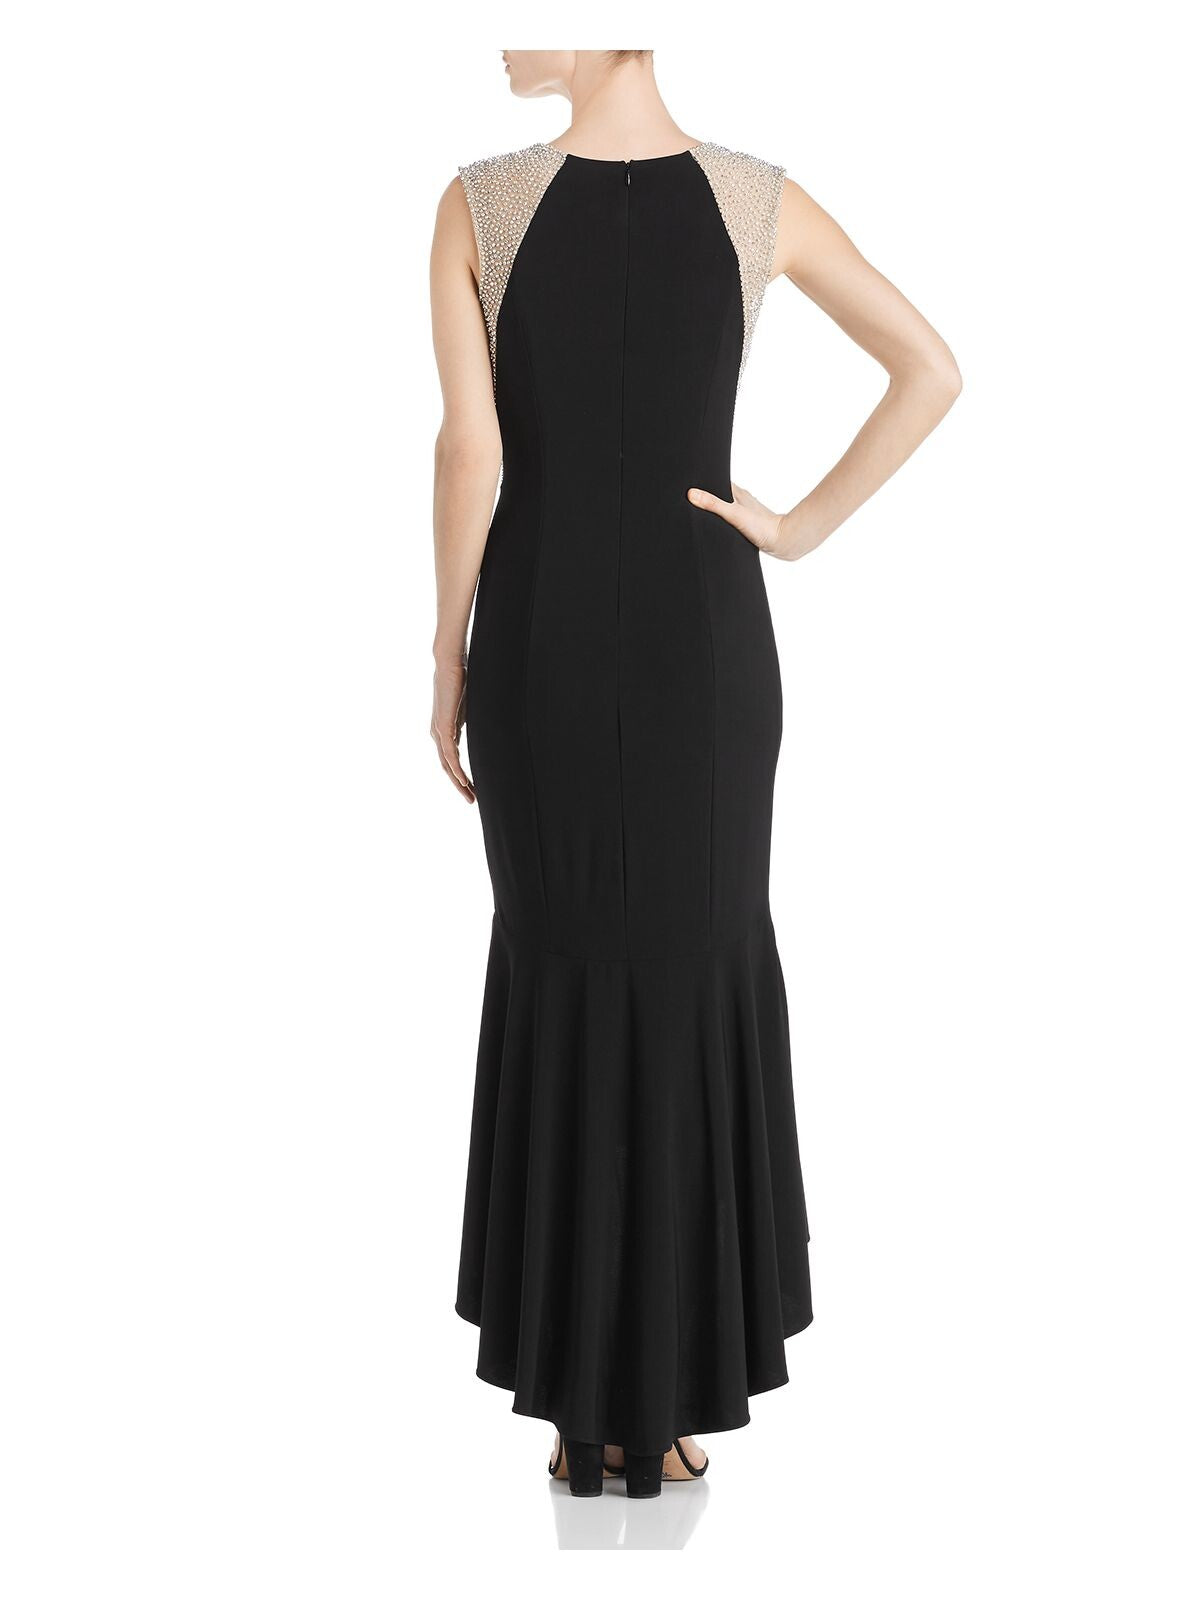 AVERY G Womens Black Beaded Zippered Hi-lo Hem Partially Lined Sleeveless Round Neck Midi Evening Gown Dress 0